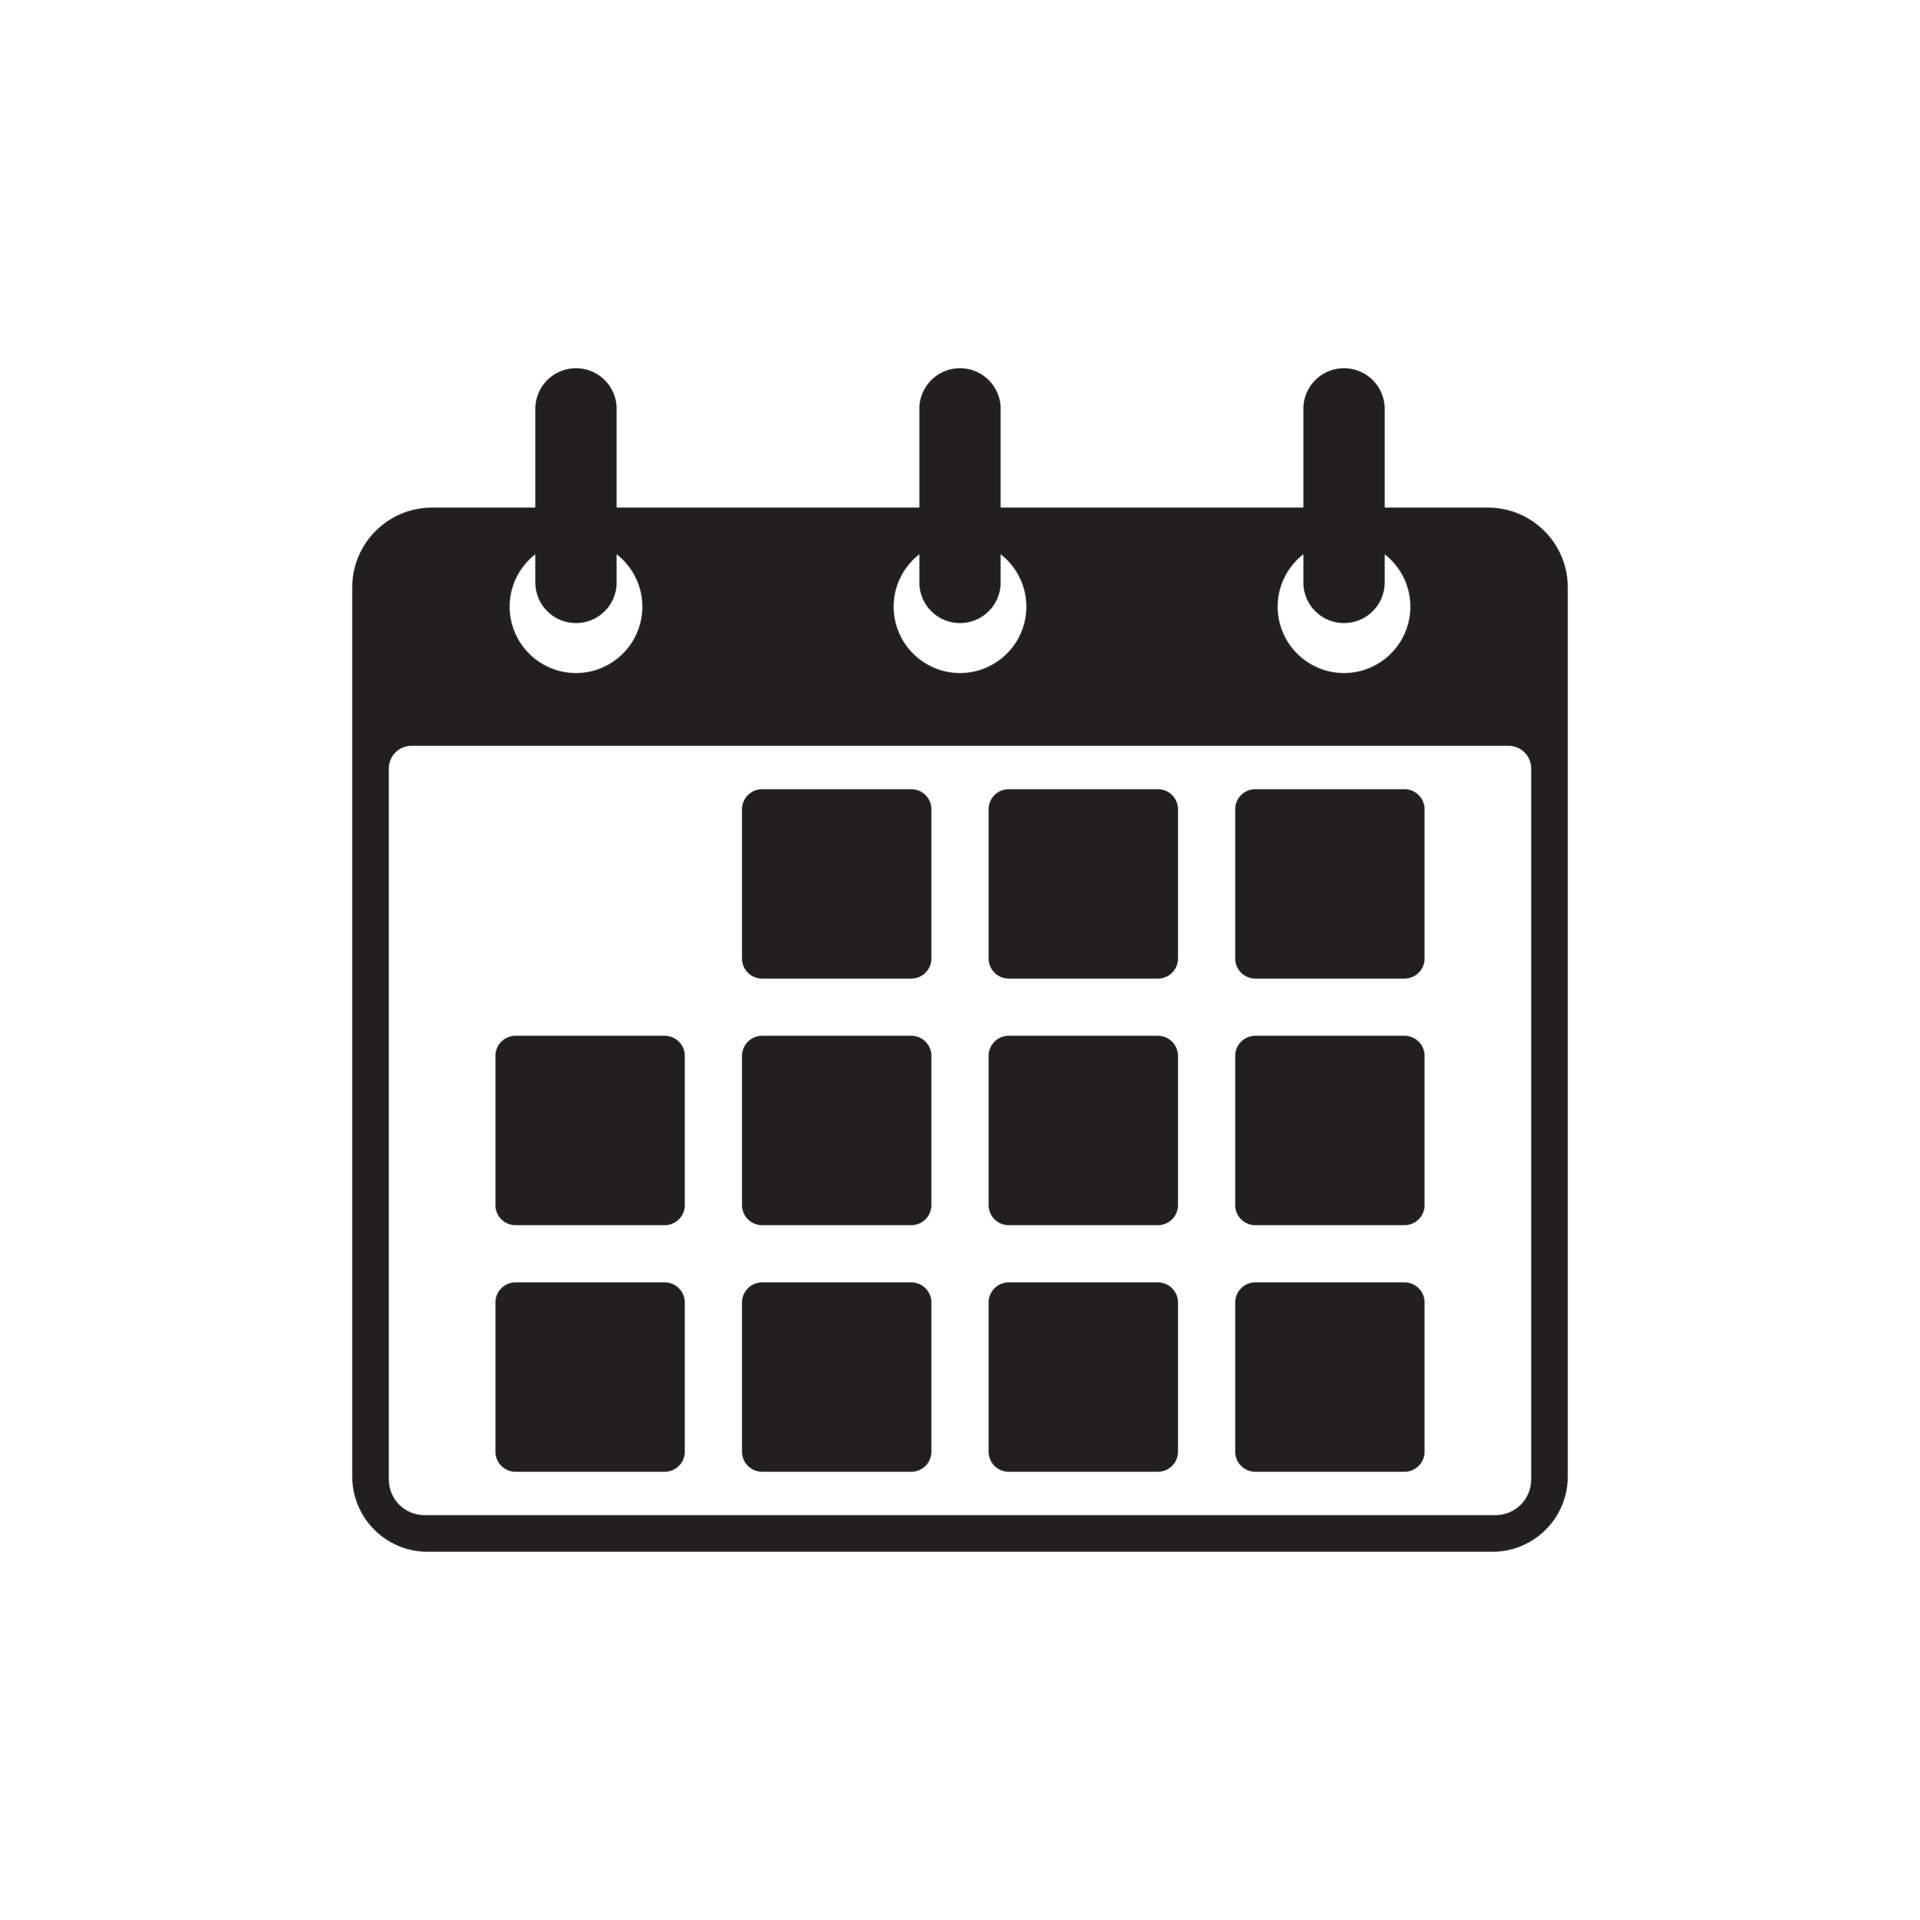 eps10 black vector calendar or schedule planner icon in simple flat